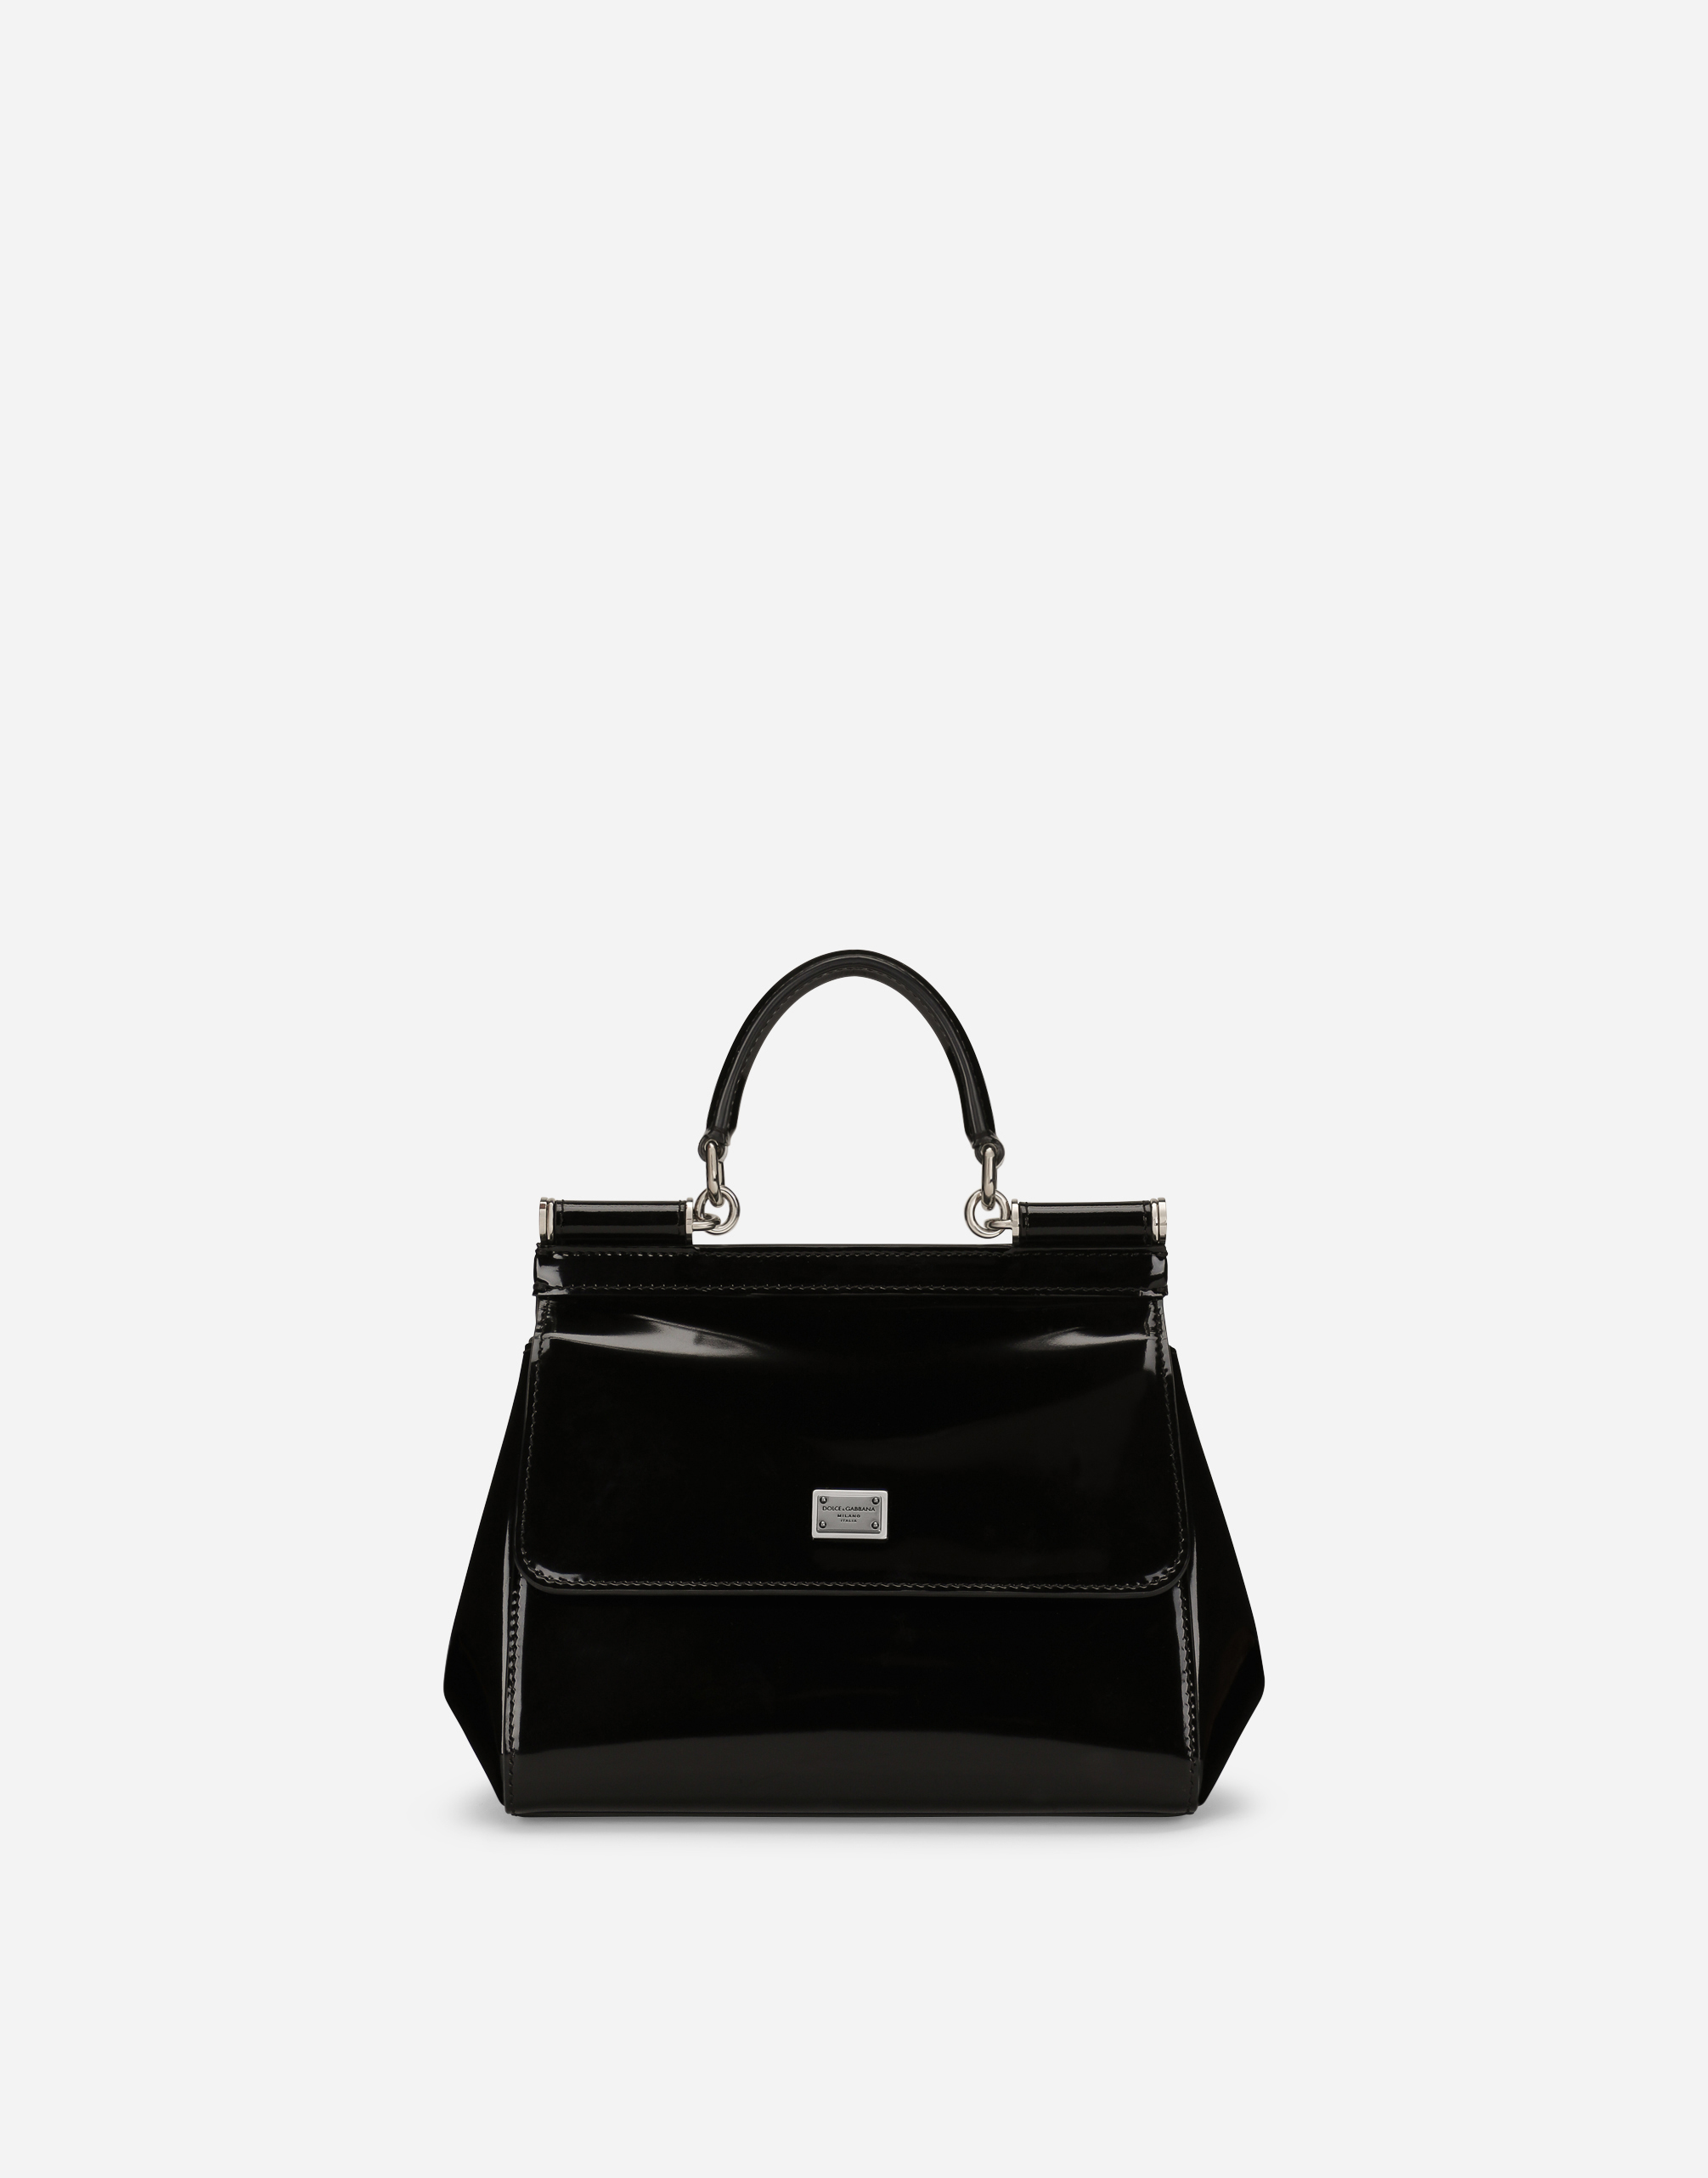 KIM DOLCE&GABBANA Medium Sicily handbag in Black